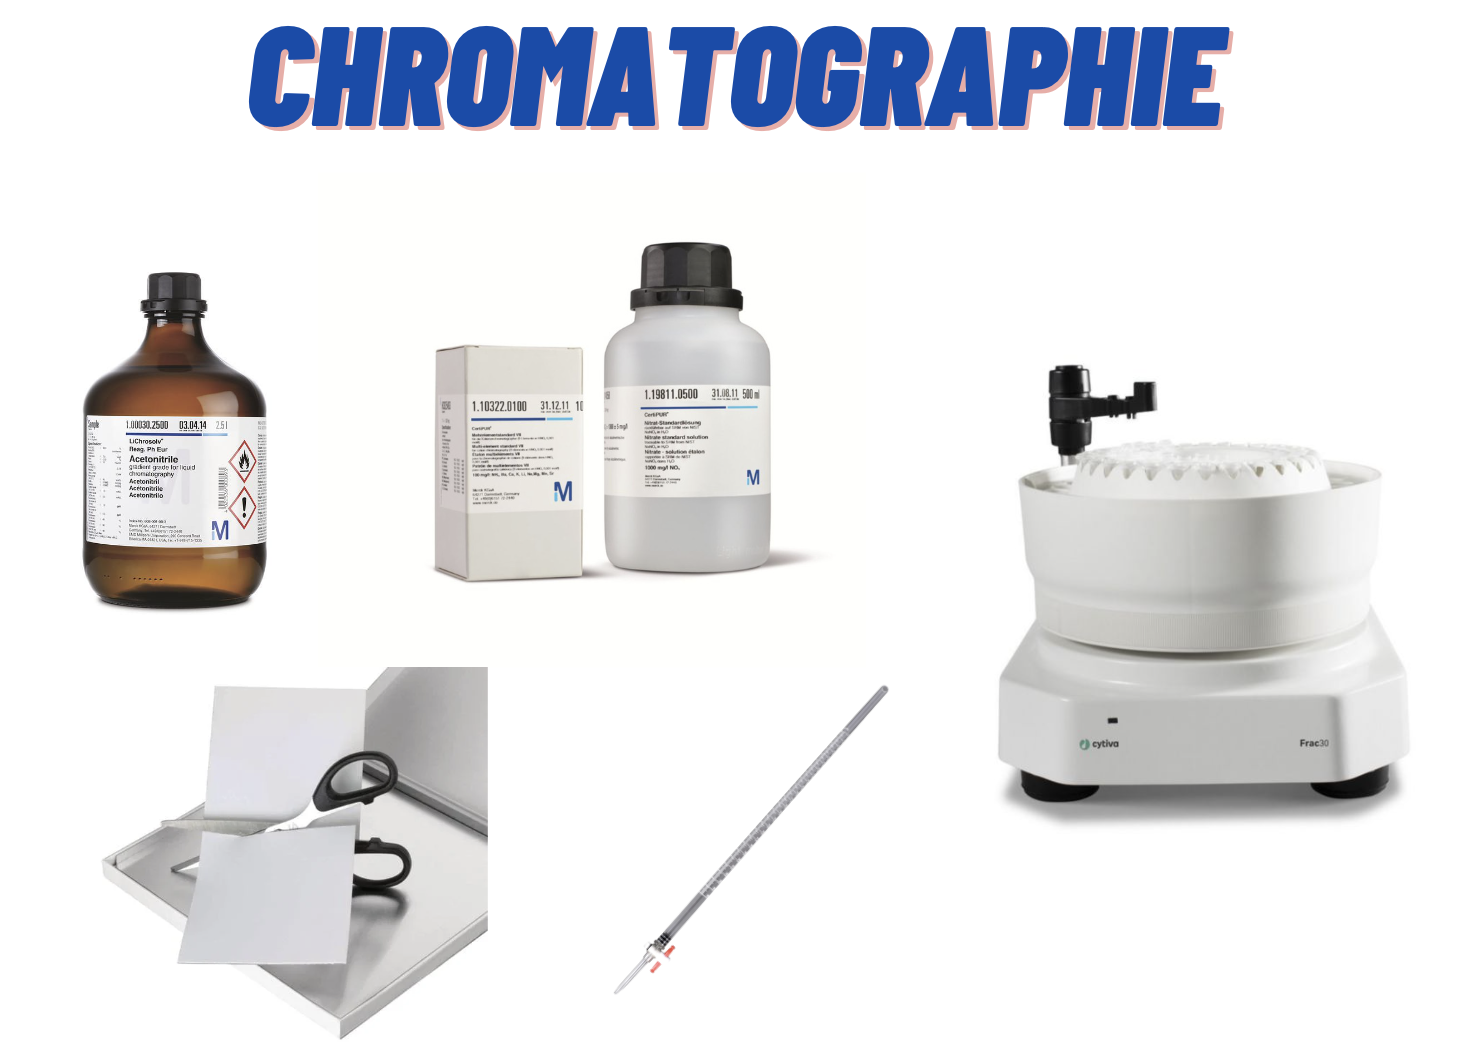 Chromatographie